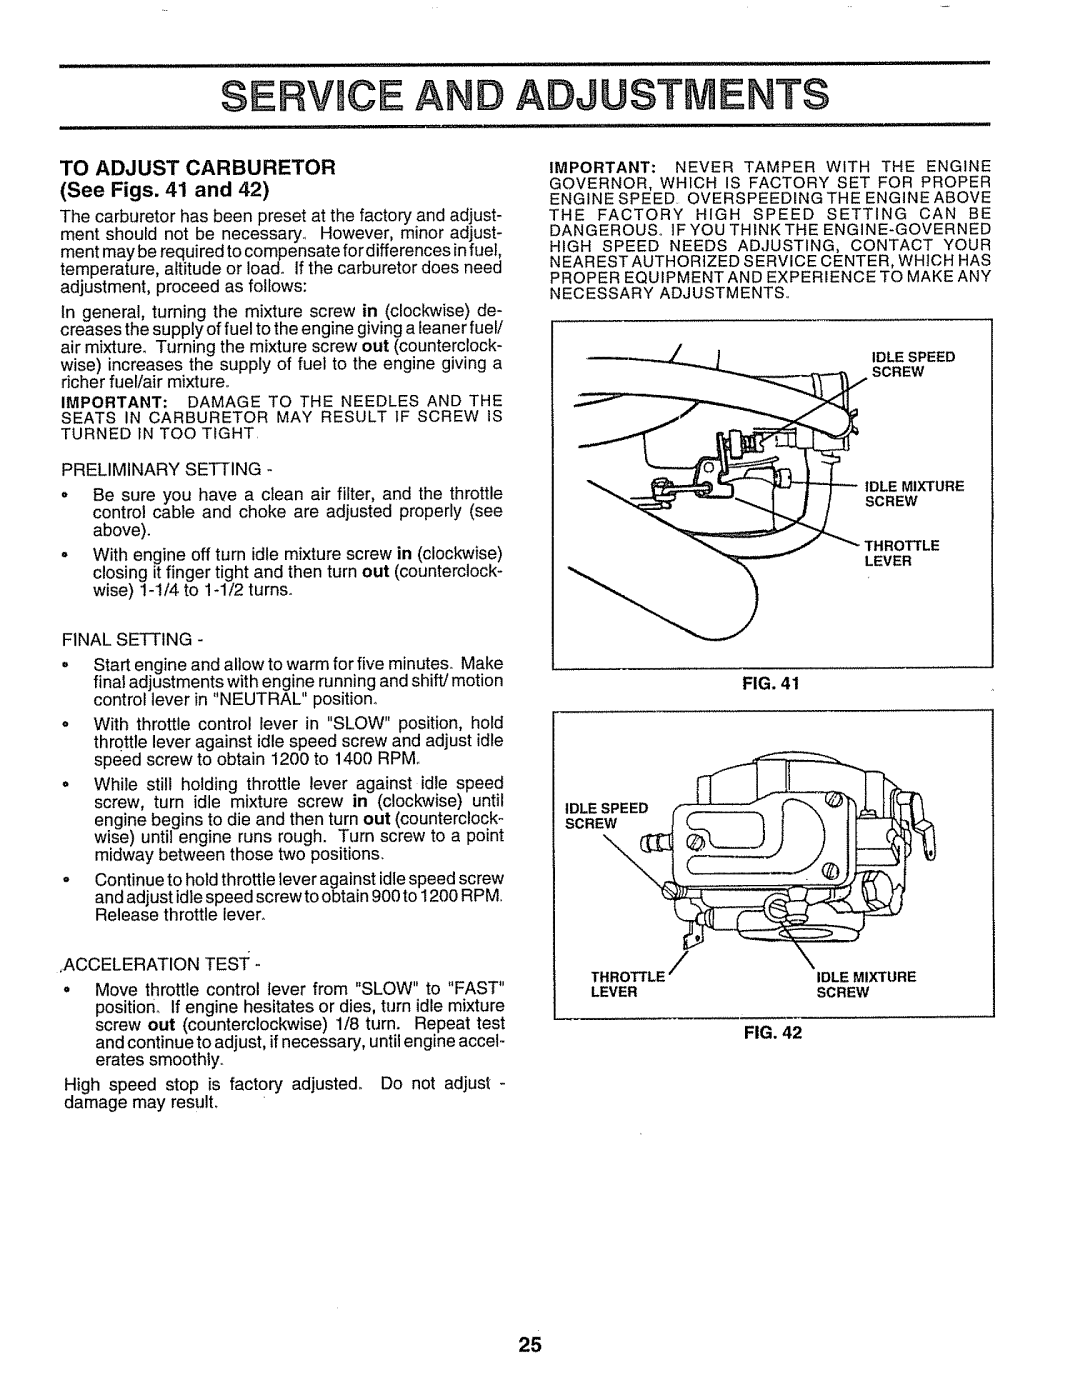 Sears 917.25597 owner manual $Ervrce And Adjustments, TO ADJUST CARBURETOR See Figs. 41 and 